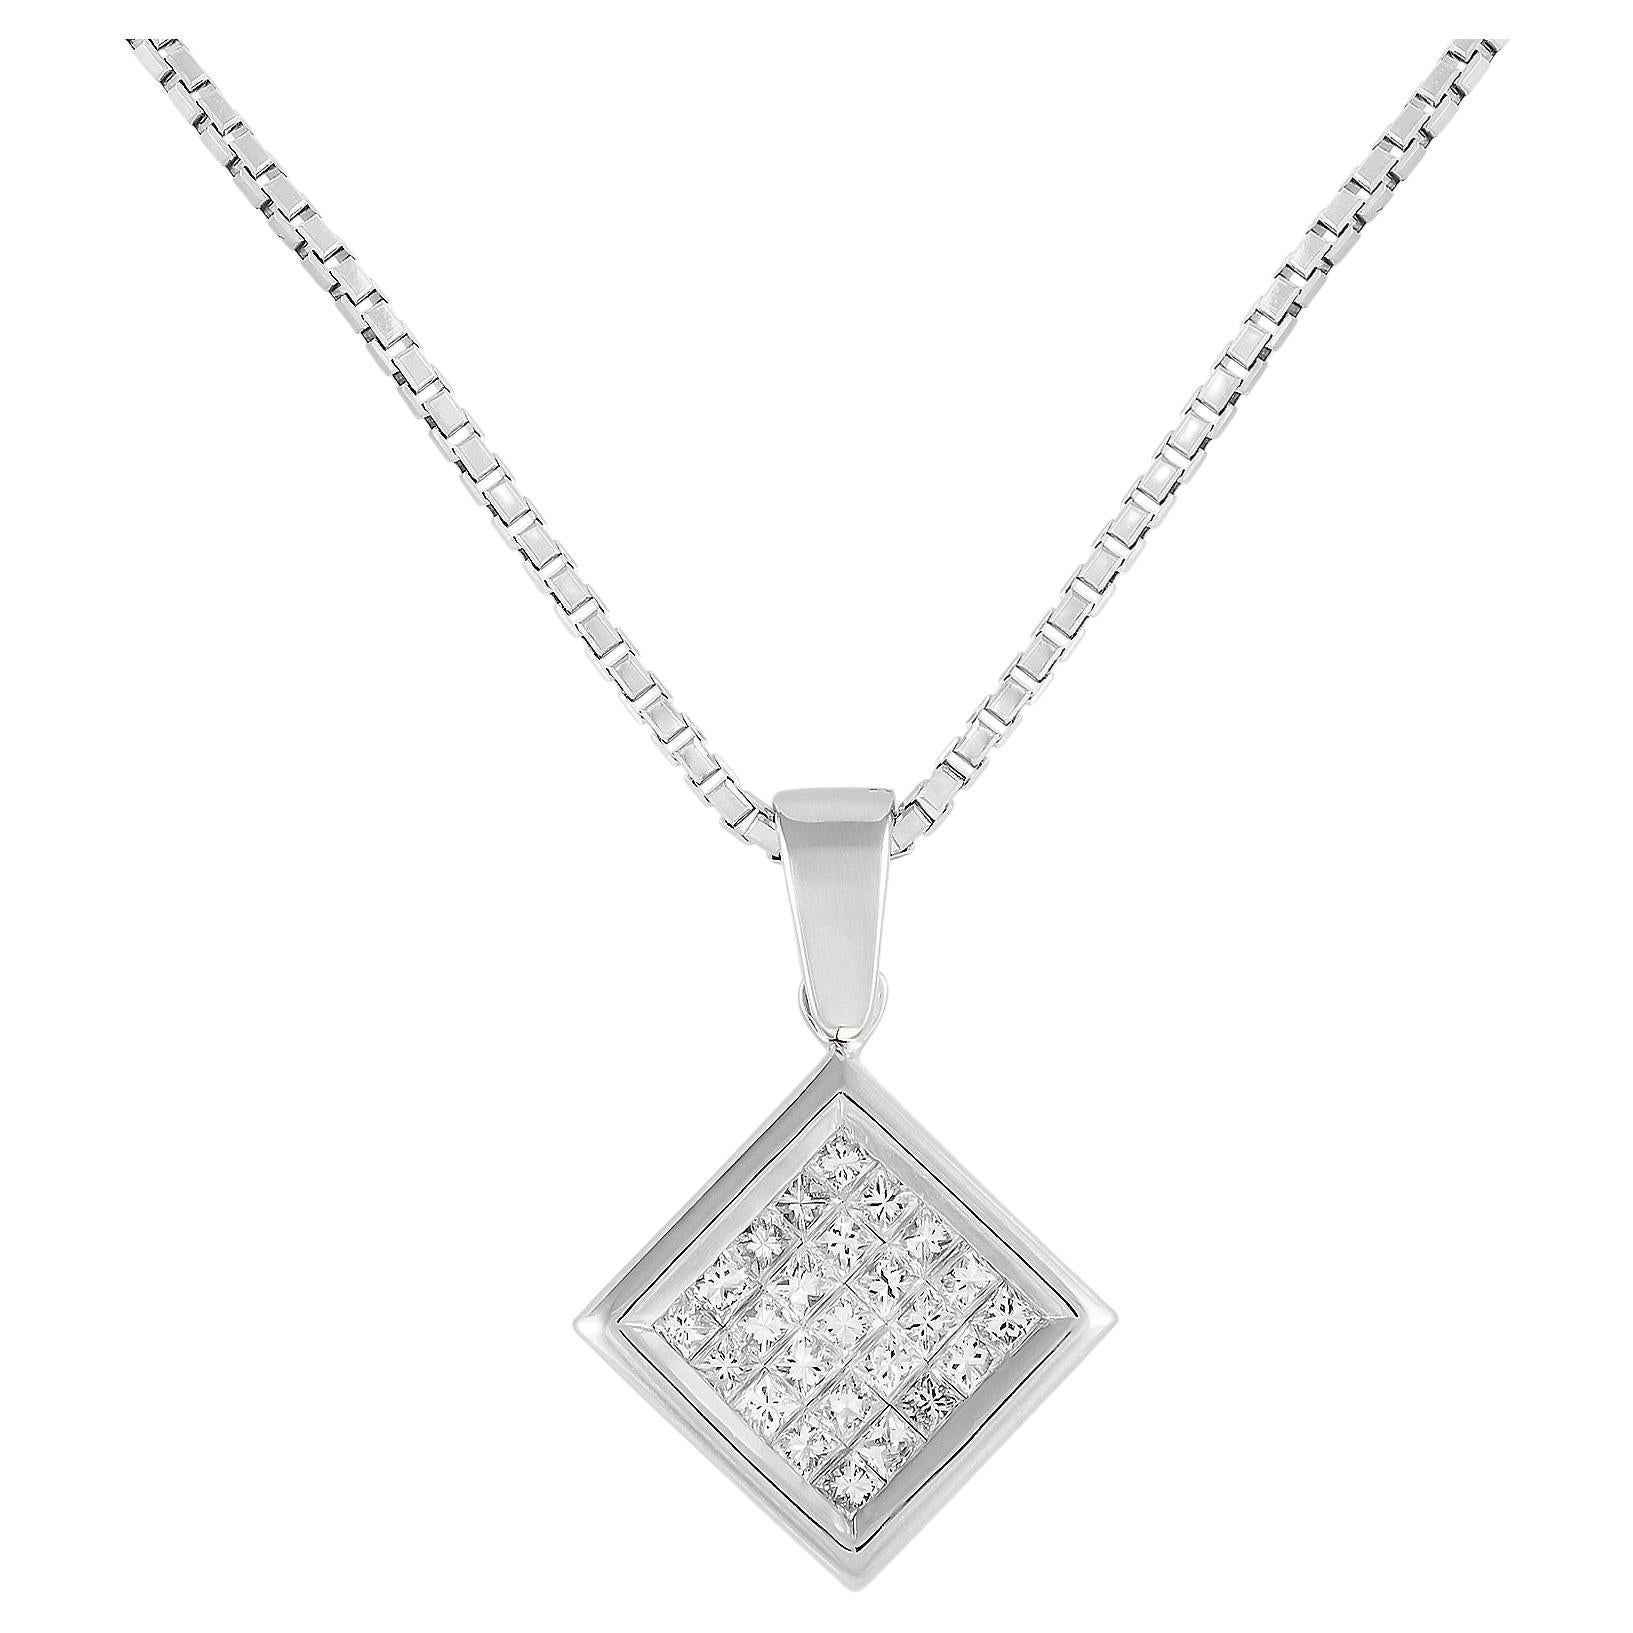 LB Exclusive Platinum 0.70ct Diamond Pendant Necklace MF15-100523